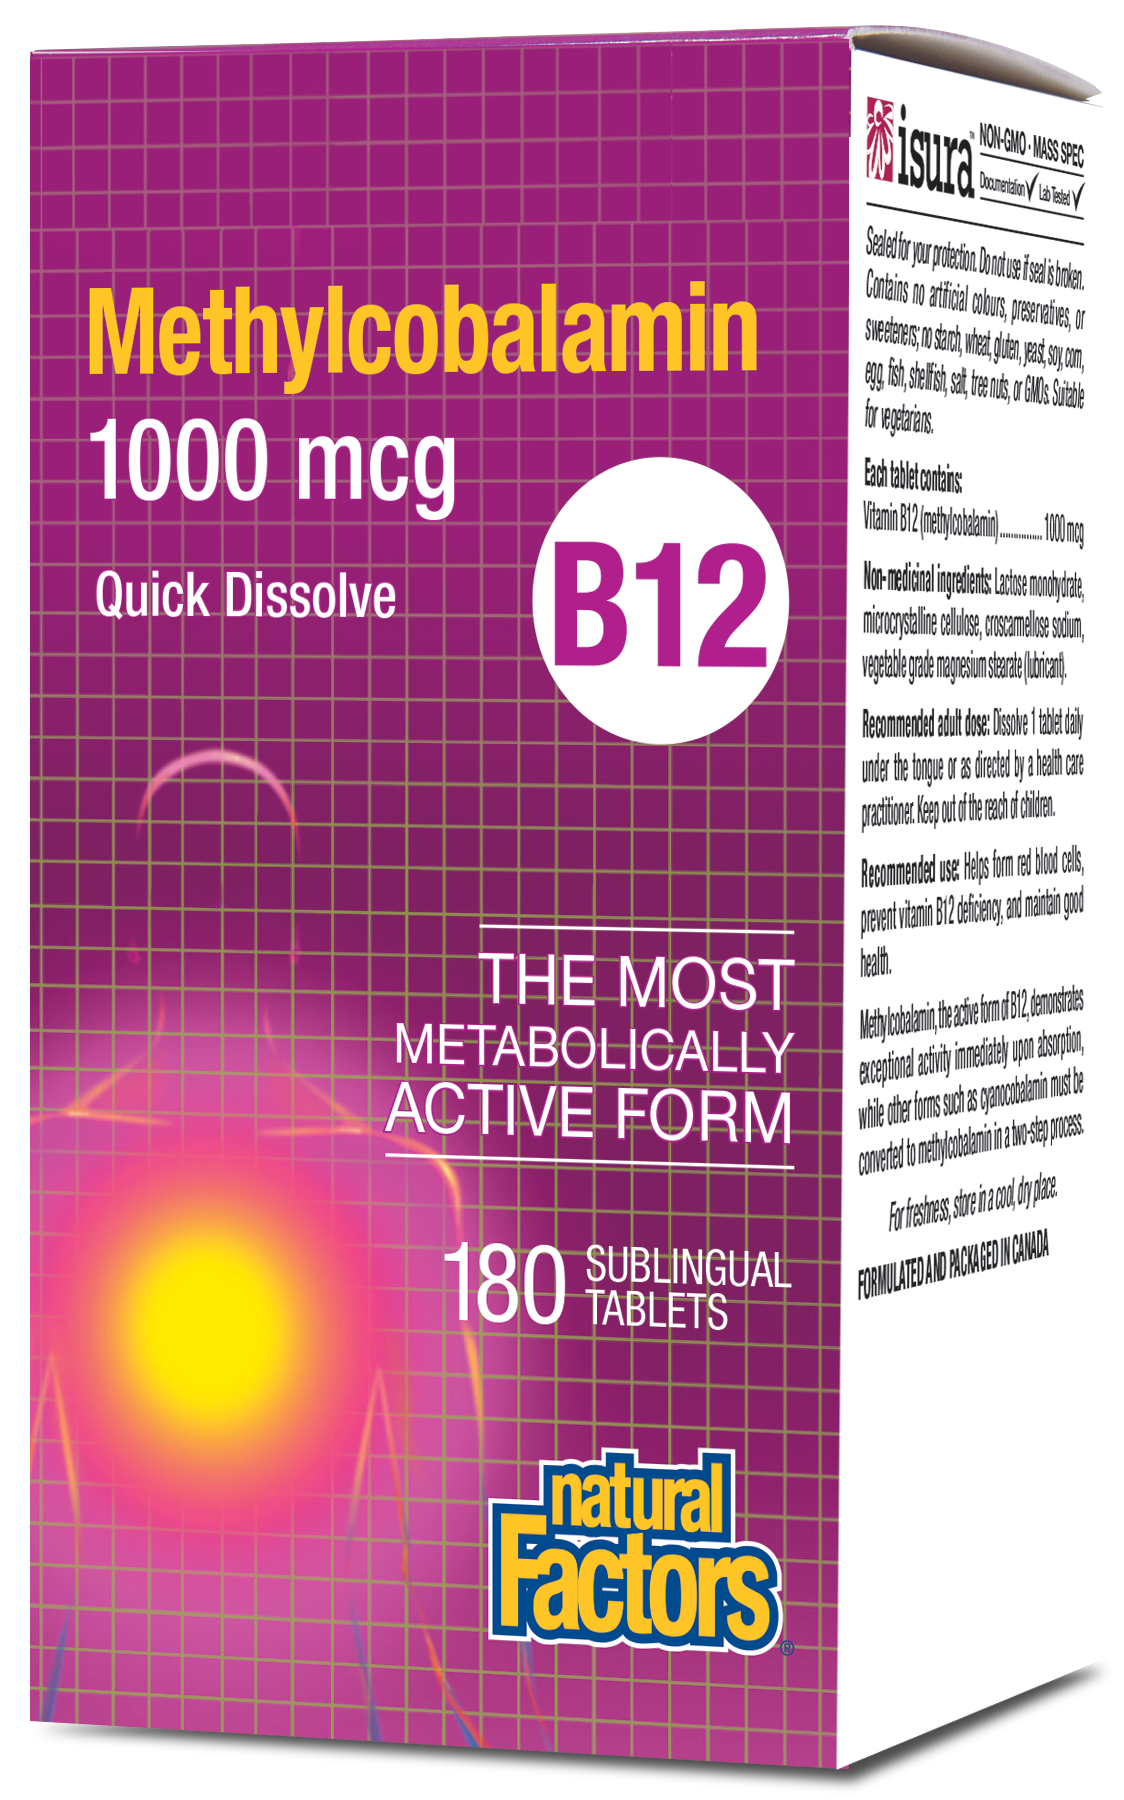 Natural Factors Vitamin B12 Methylcobalamin 1000mcg 180 Sublingual Tablets Quick Dissolve